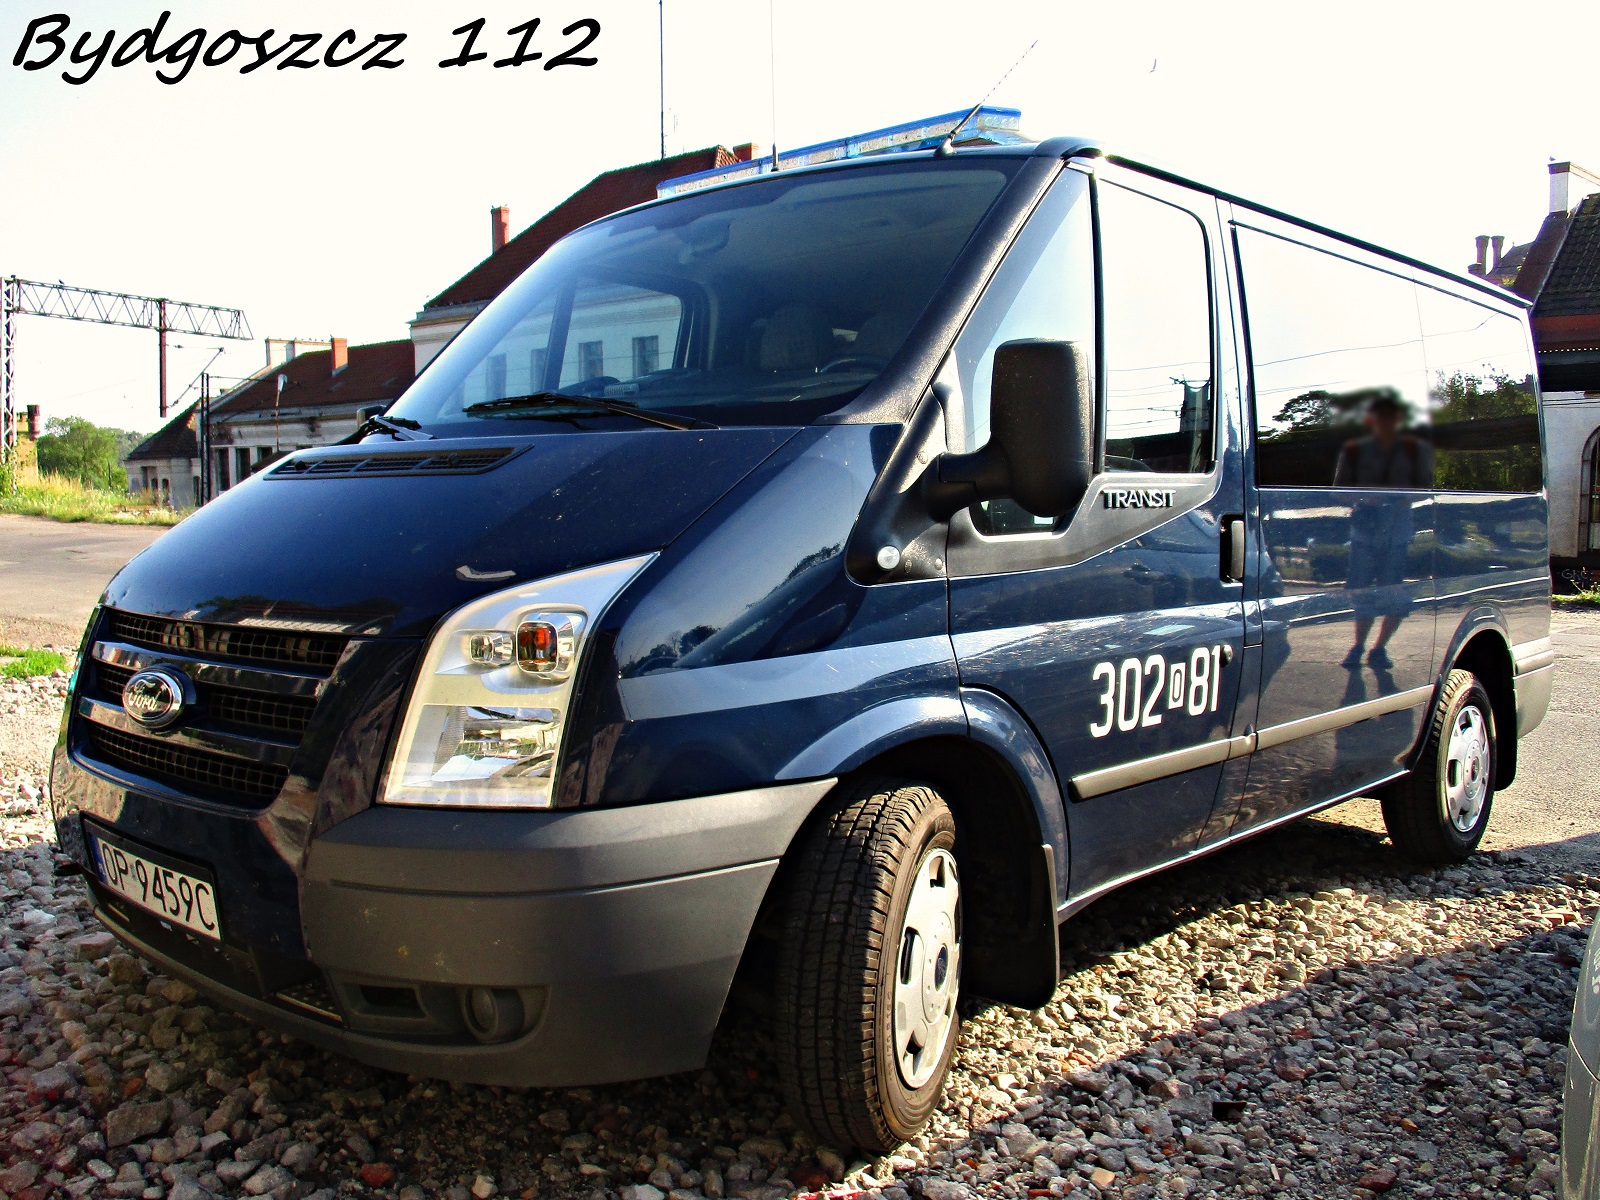 302[O]82 - SLKw Ford Transit - JRG 2 Opole